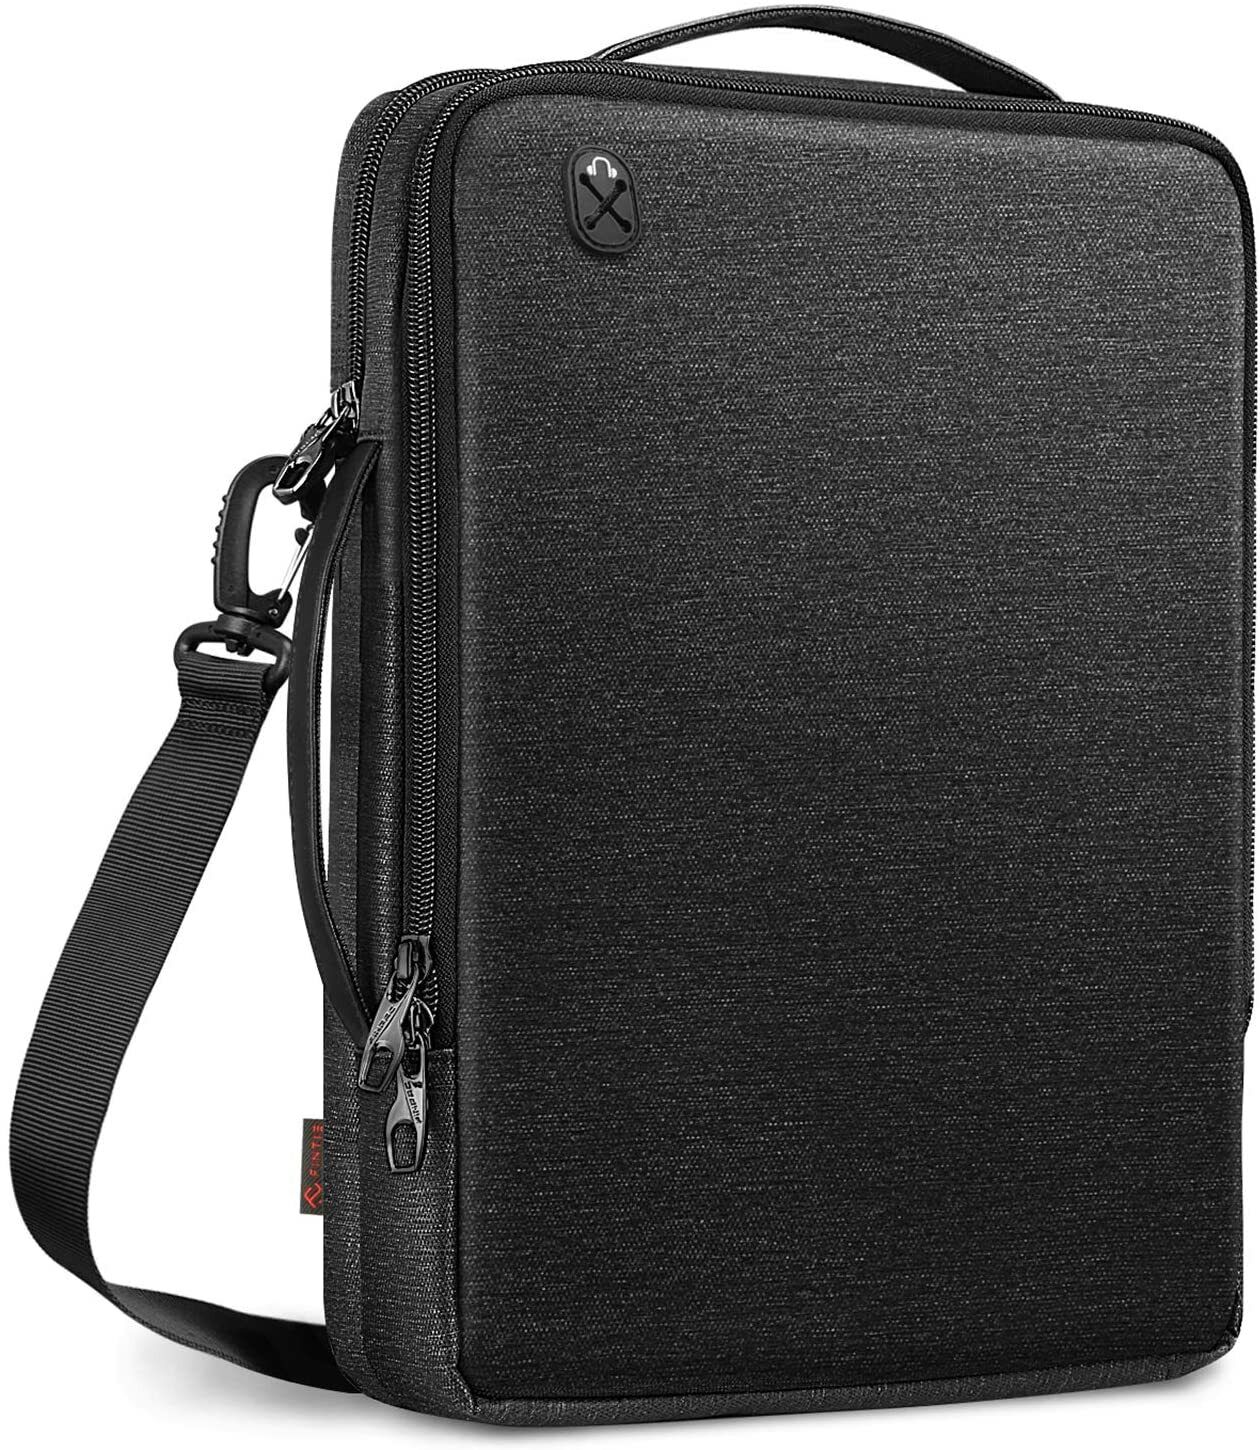 13-inch Laptop Shoulder Bag for 13.3'' MacBook Pro/Air Waterproof Carrying Bag